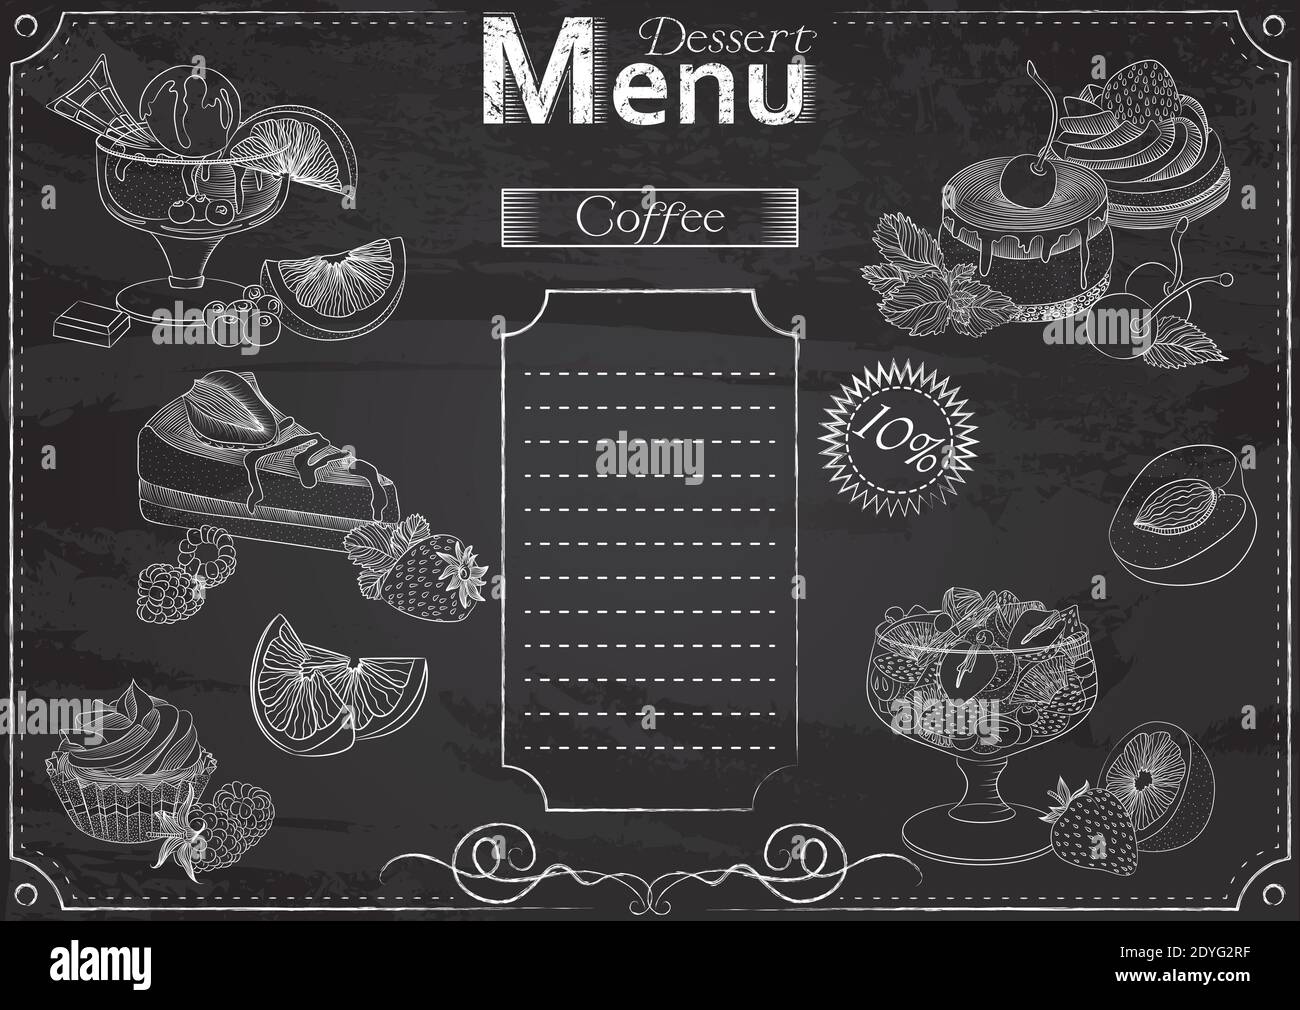 Plantilla vectorial con elementos de postre para menú estilizados como  dibujo de tiza en pizarra.Diseño para un restaurante, cafetería o bar  Imagen Vector de stock - Alamy